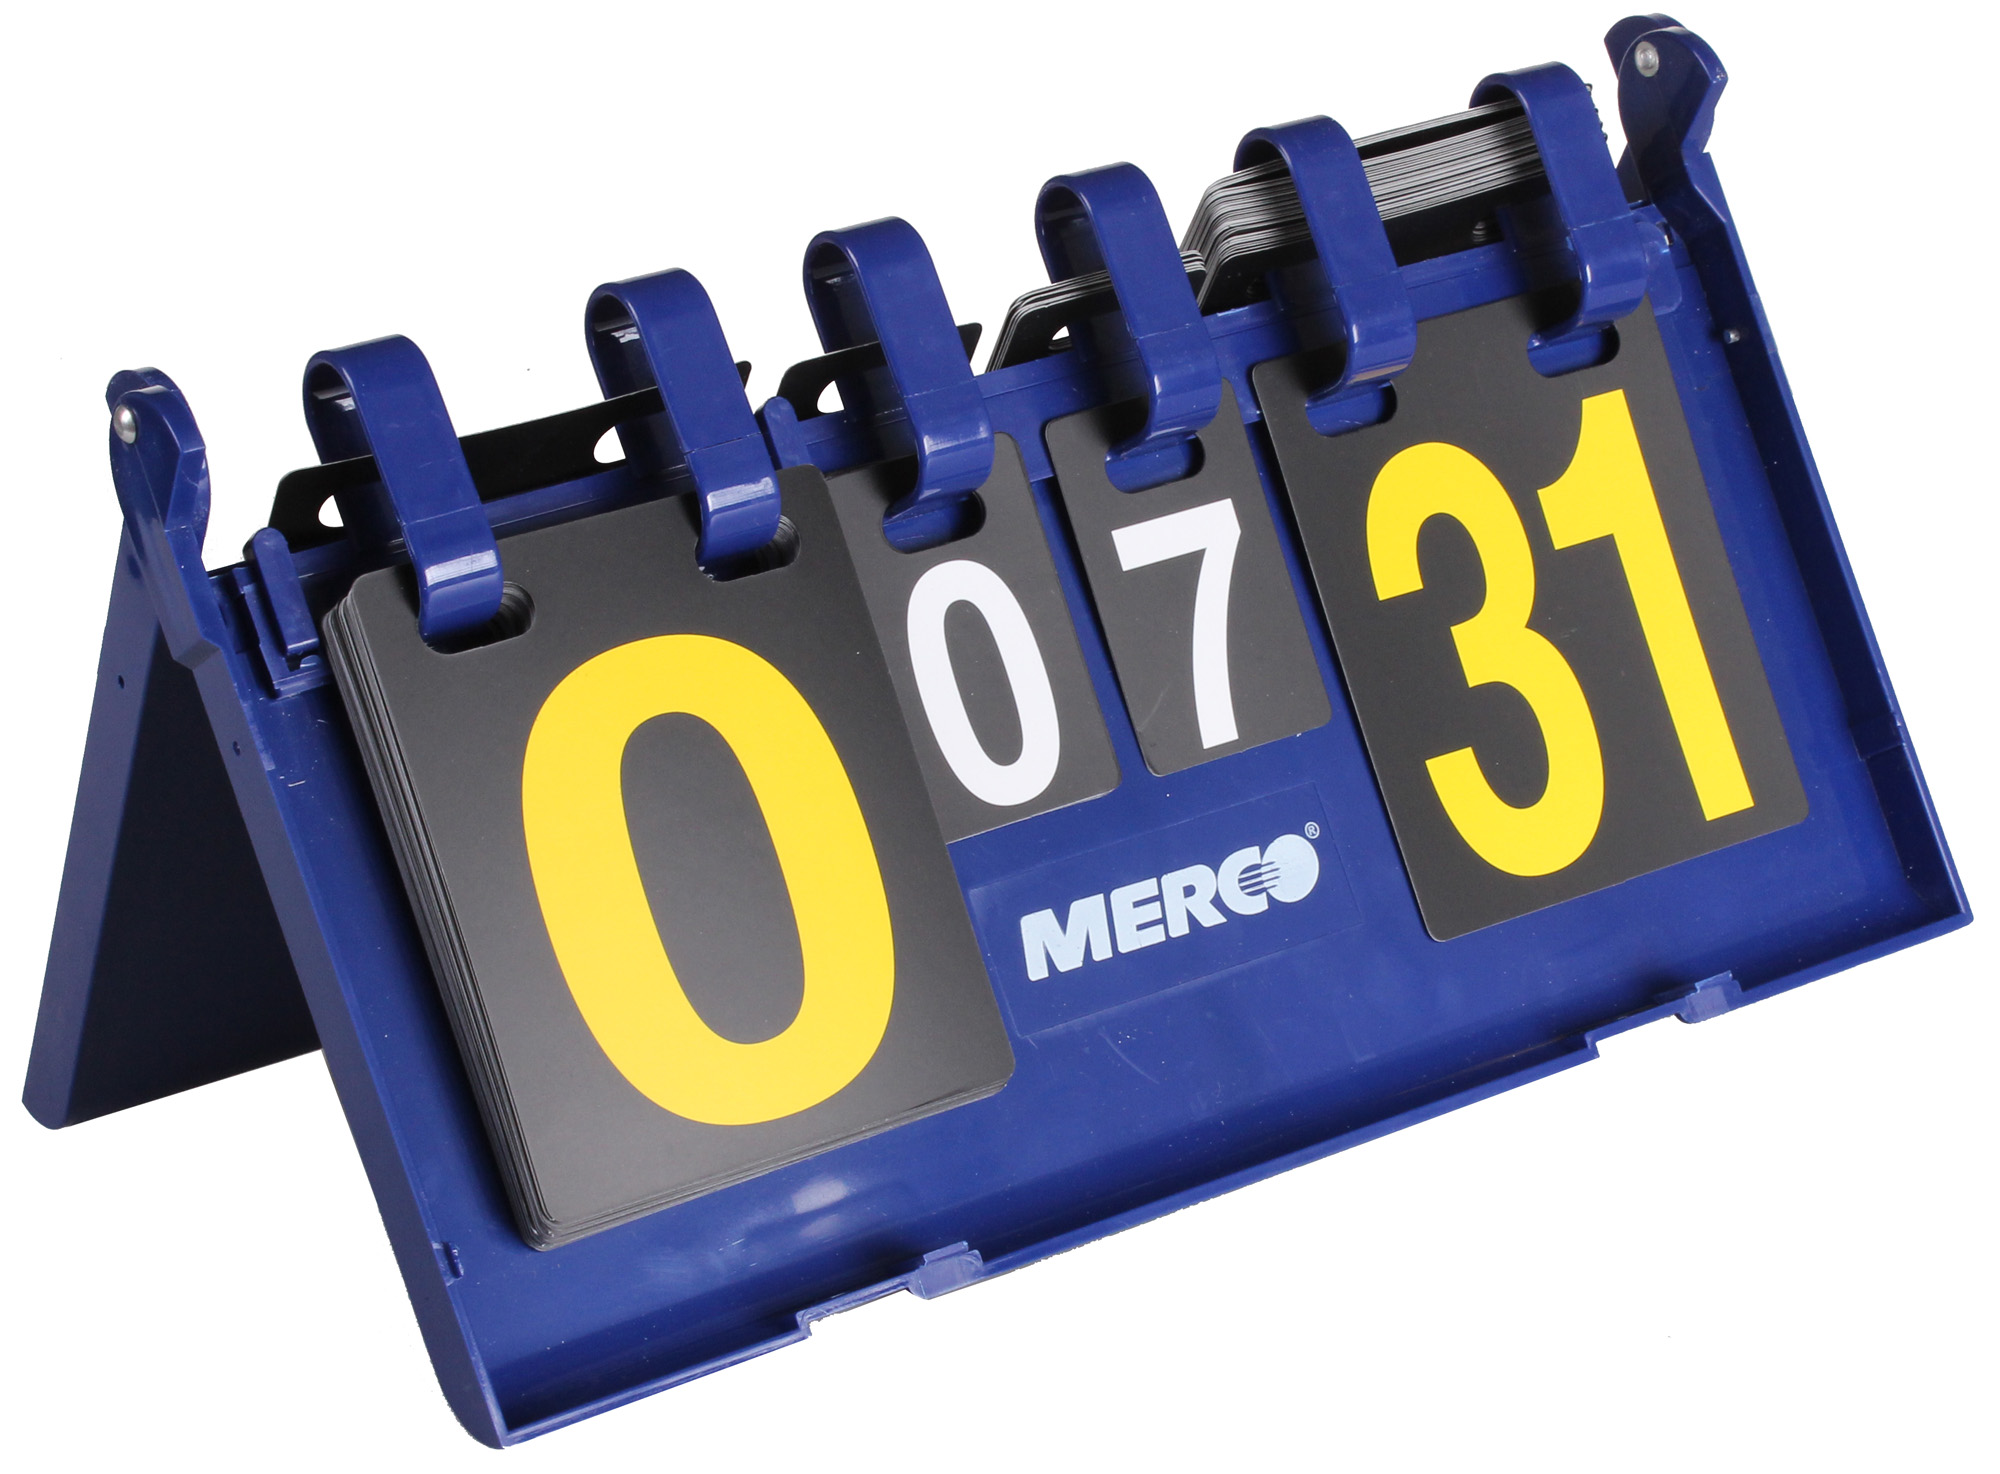 Tabela scor Merco 0-31 puncte 0-7 seturi